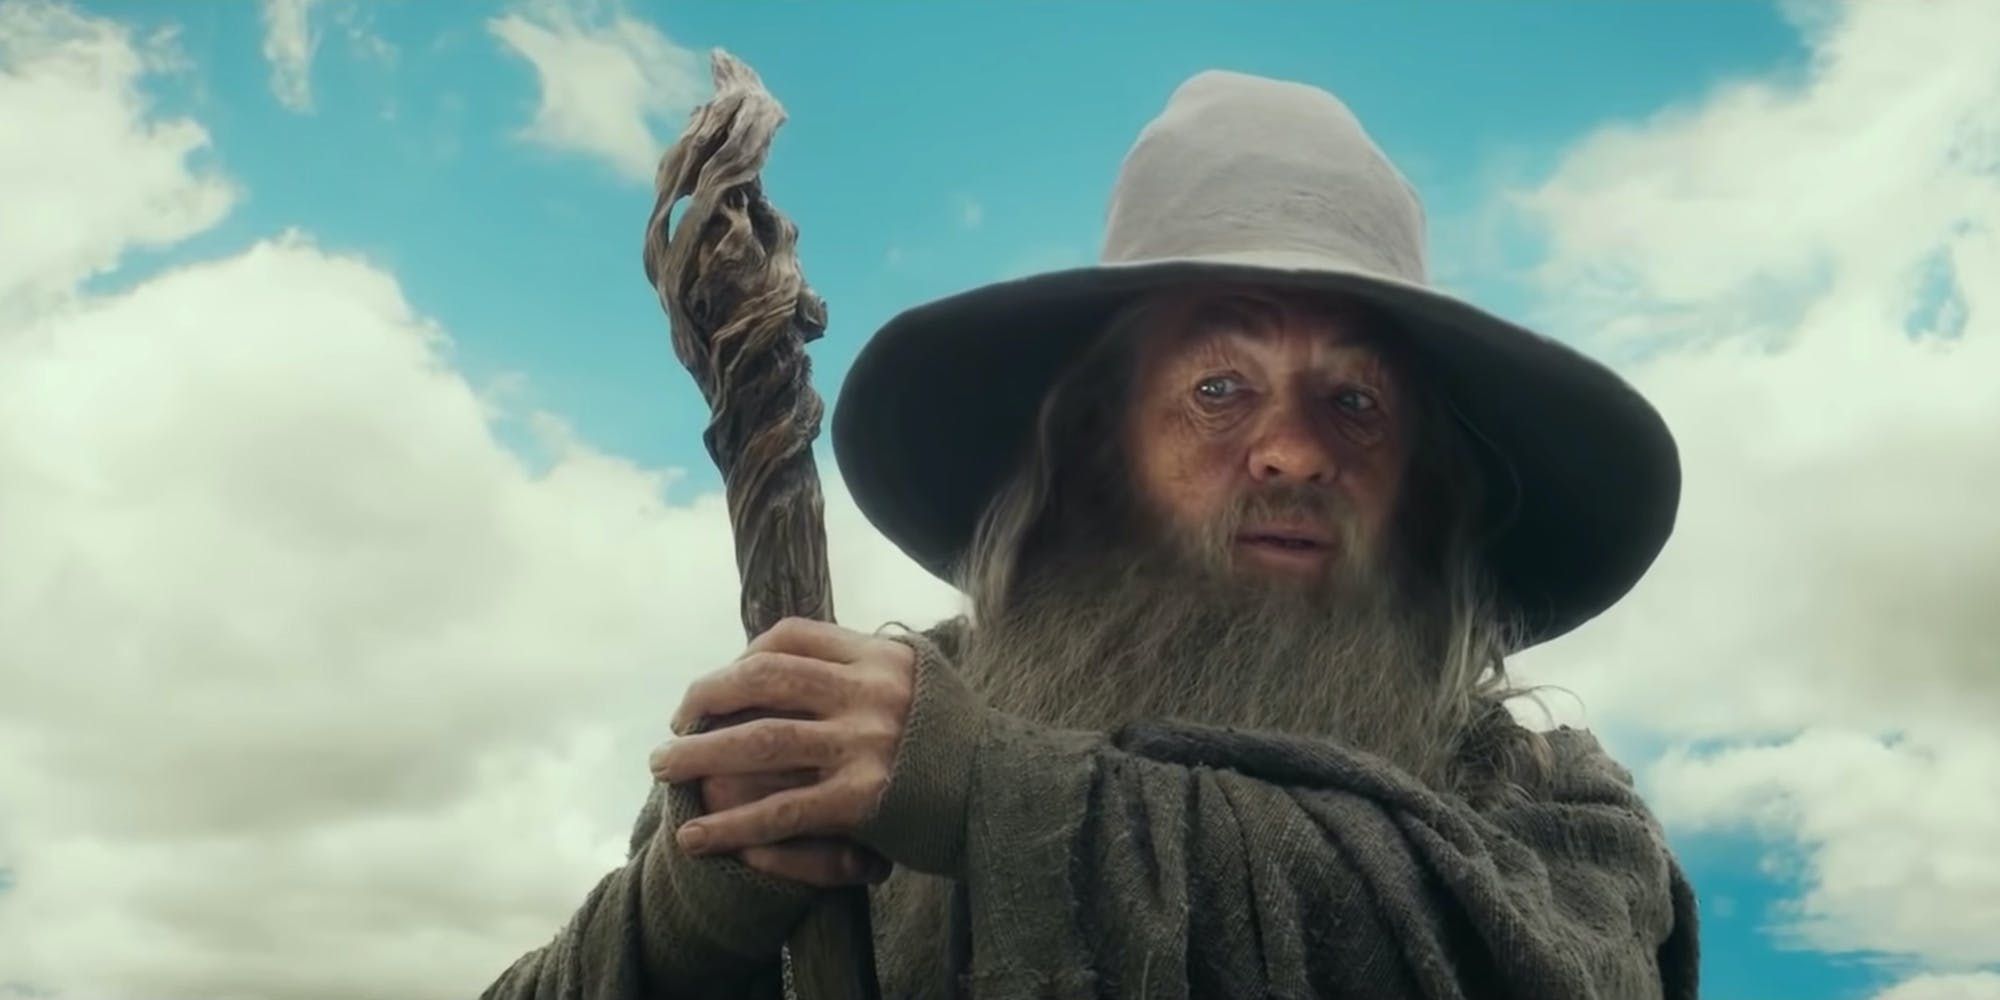 Ian McKellen as Gandalf the Gray from 